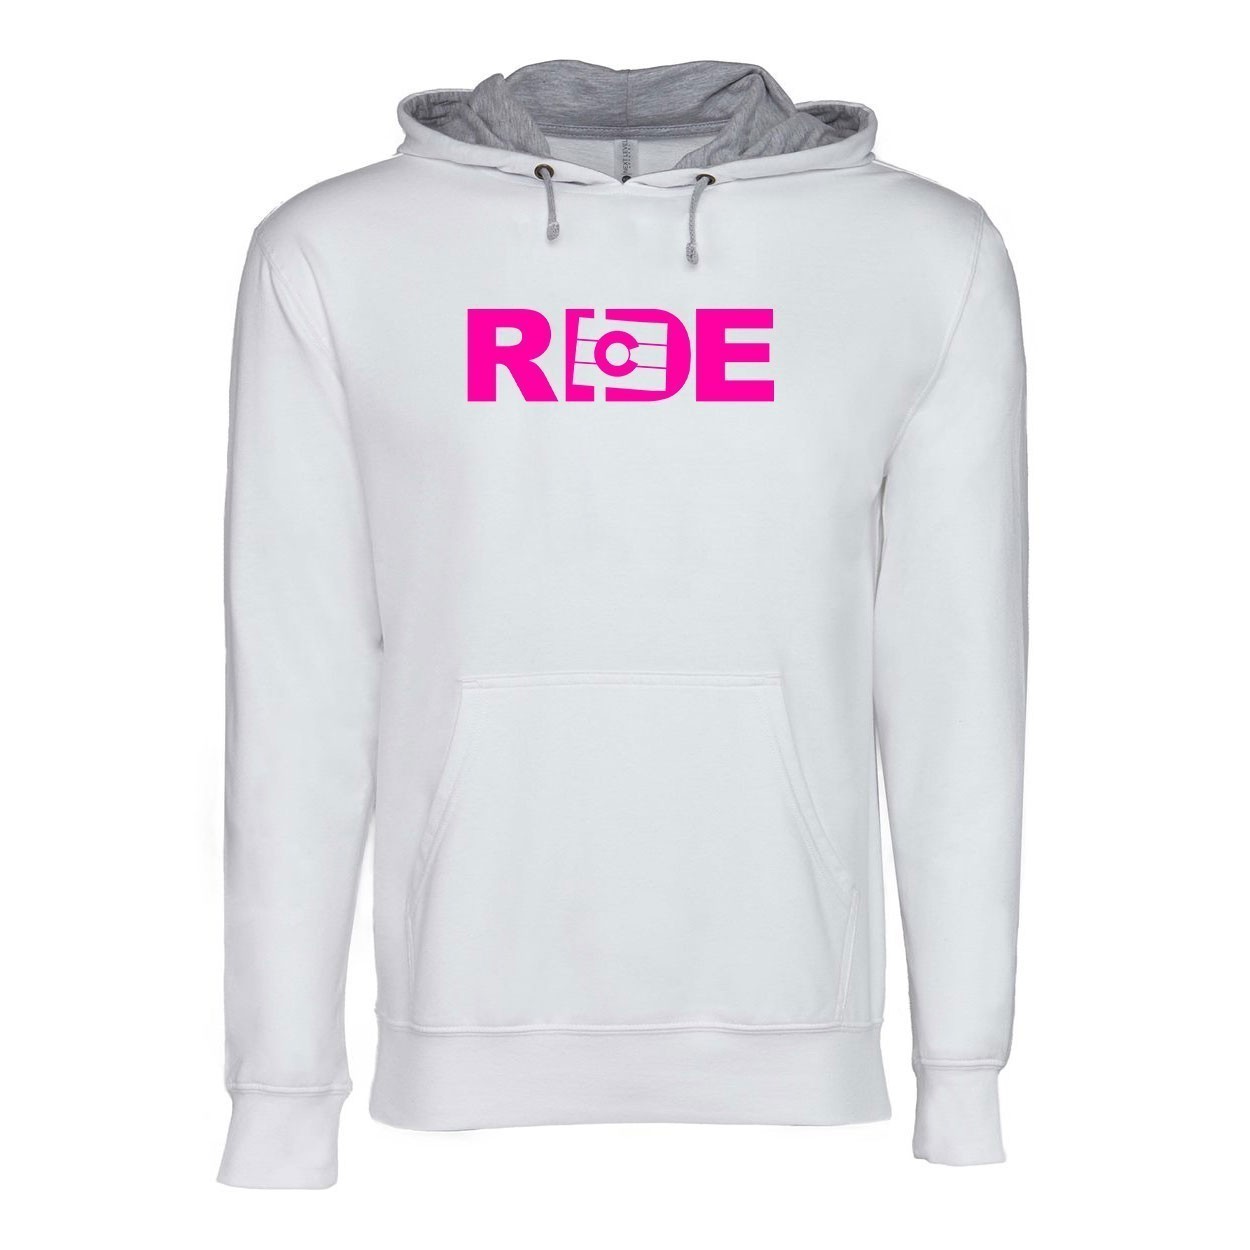 Ride Colorado Classic Lightweight Sweatshirt White/Heather Gray (Pink Logo)